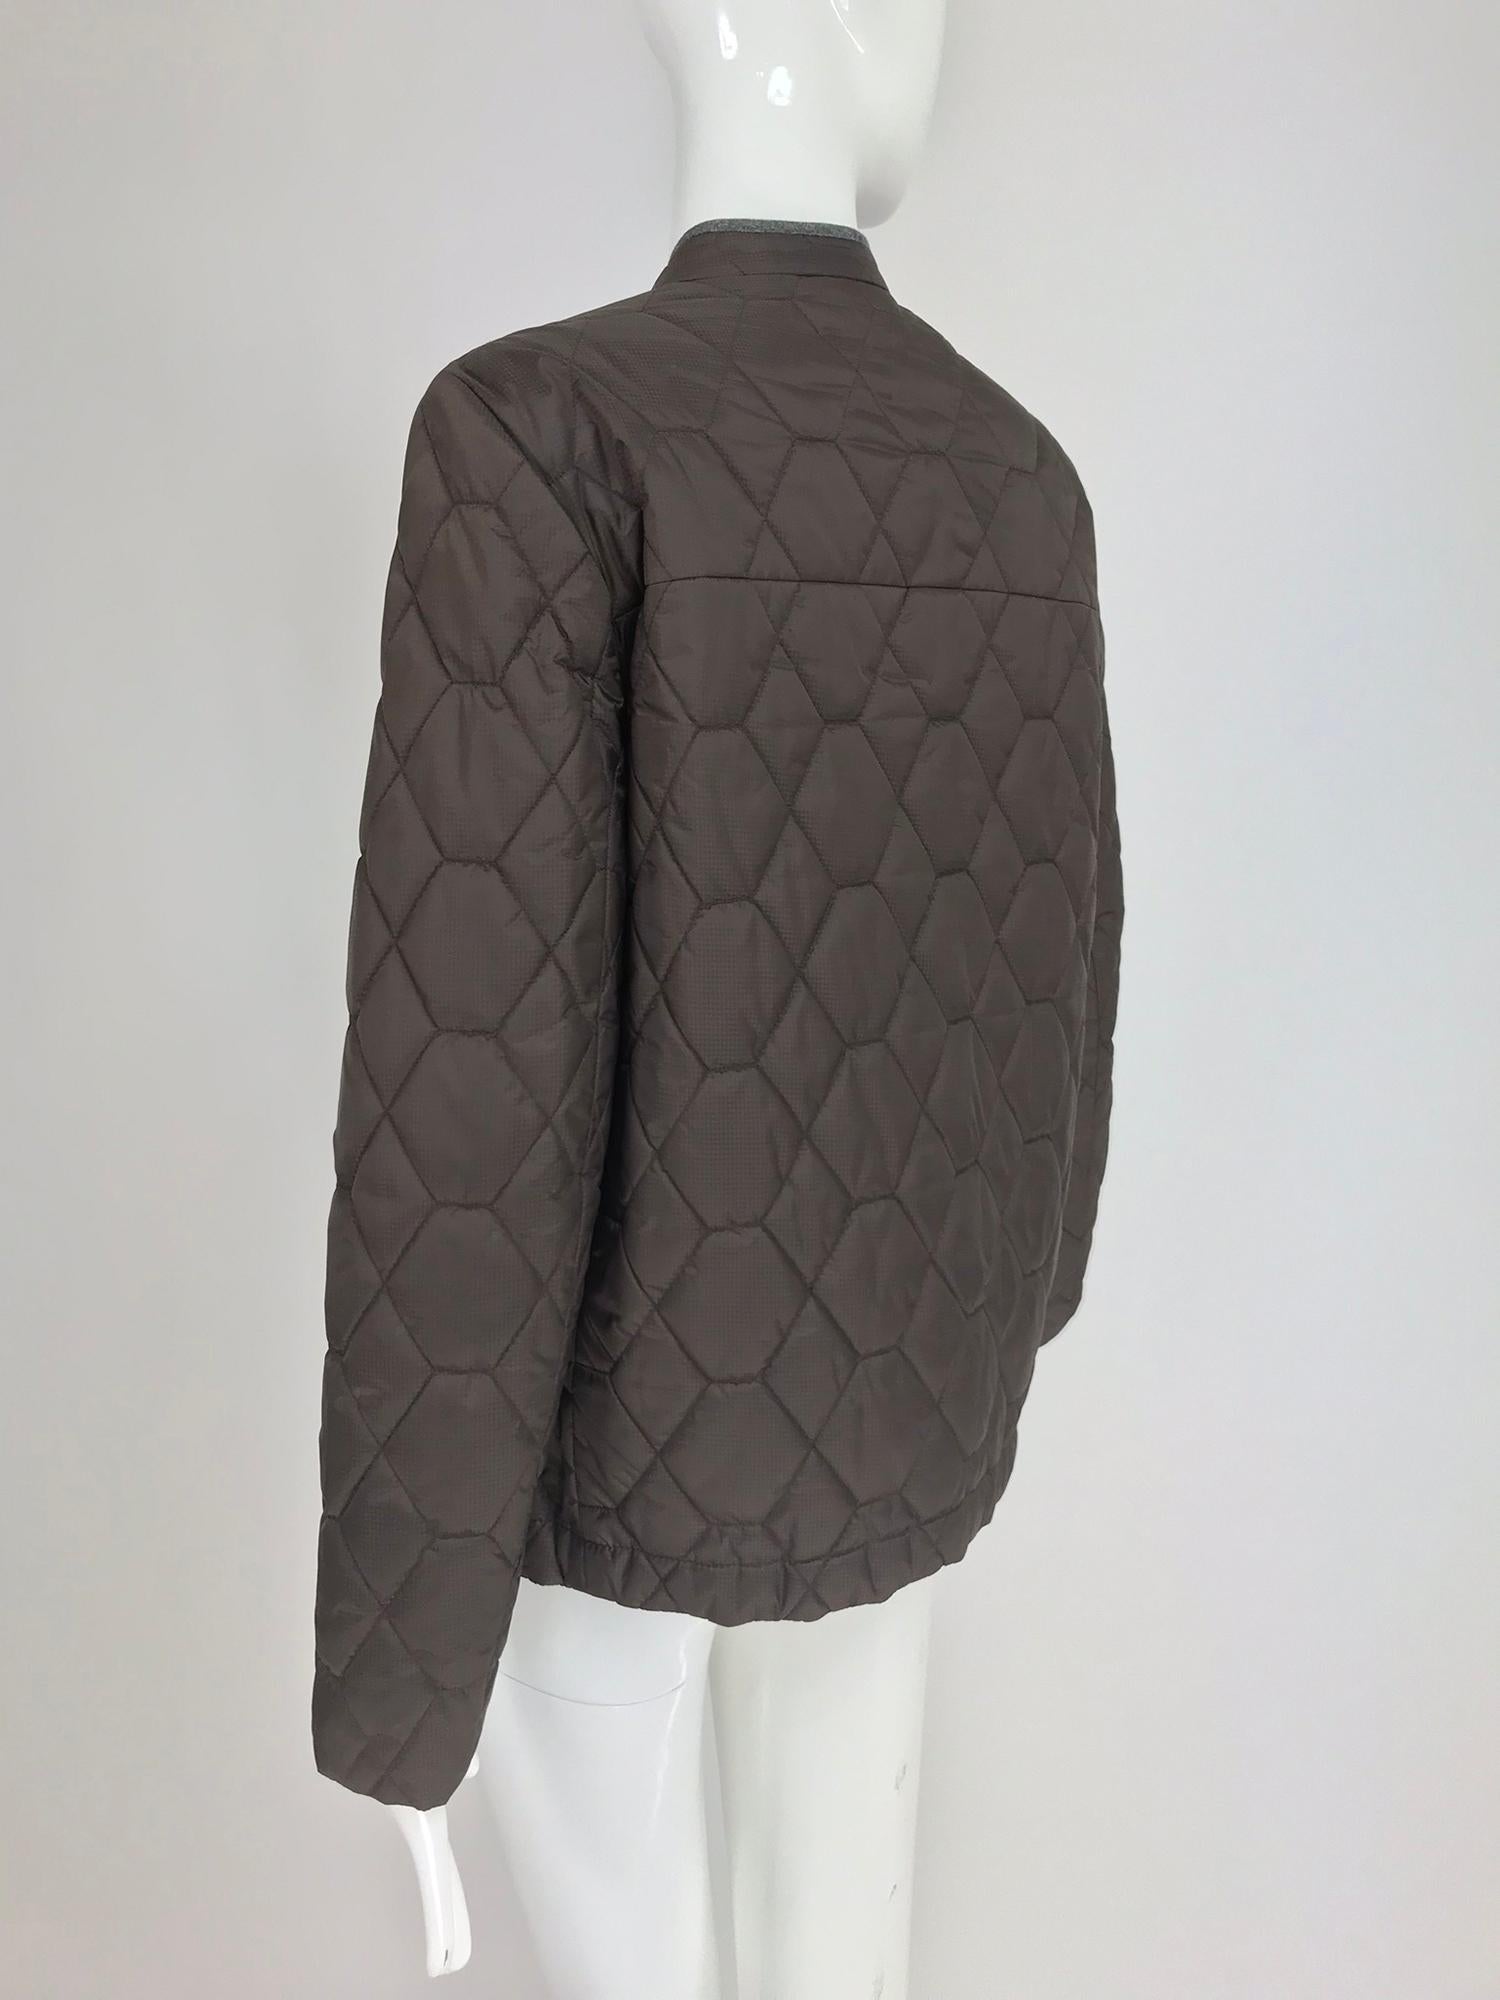 Women's Brunello Cucinelli Chocolate Brown geometric pattern Quilted Sport Jacket 42